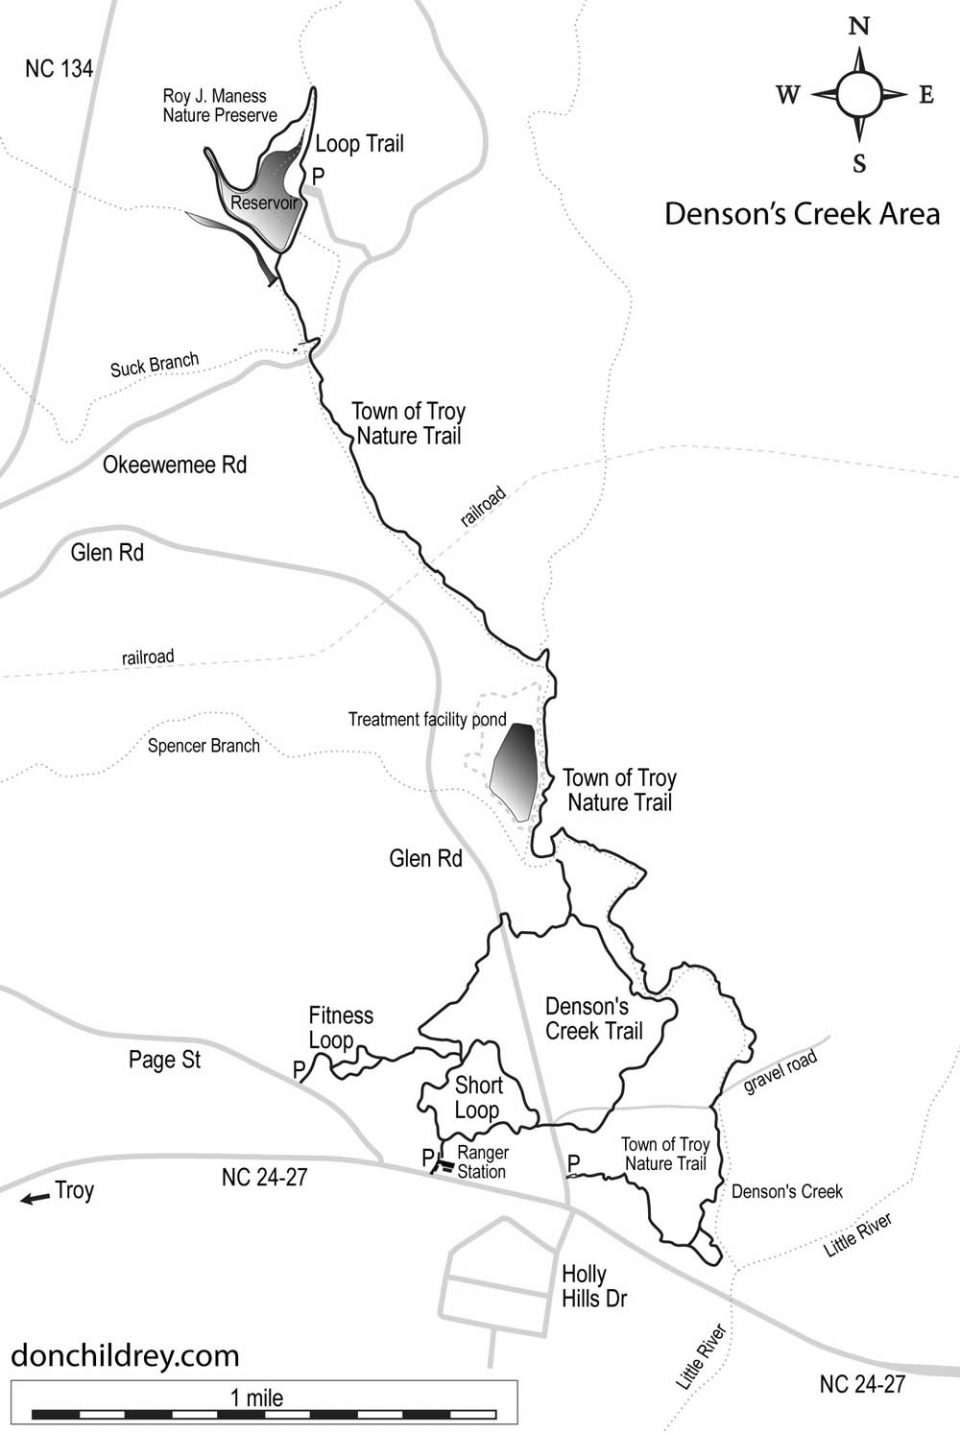 Denson's Creek Area map